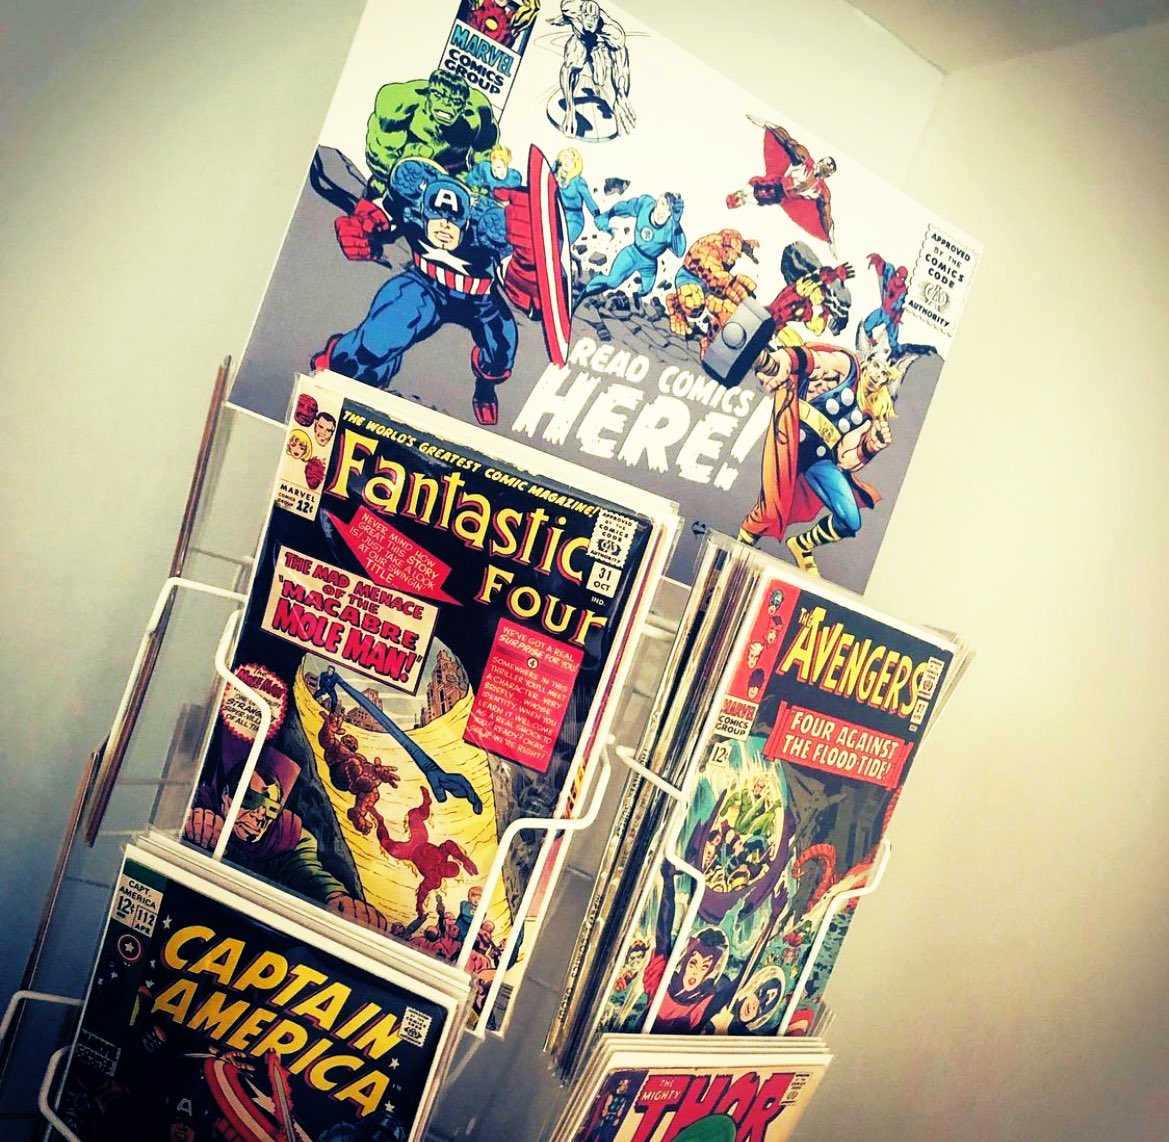 It’s the #weekend ….time to read some comics here!

#hulk #marvel #comics #XMen #blackpanther #ironman #art #talestoastonish #thor #1970s #Silverage https://t.co/DIQooGcRJq